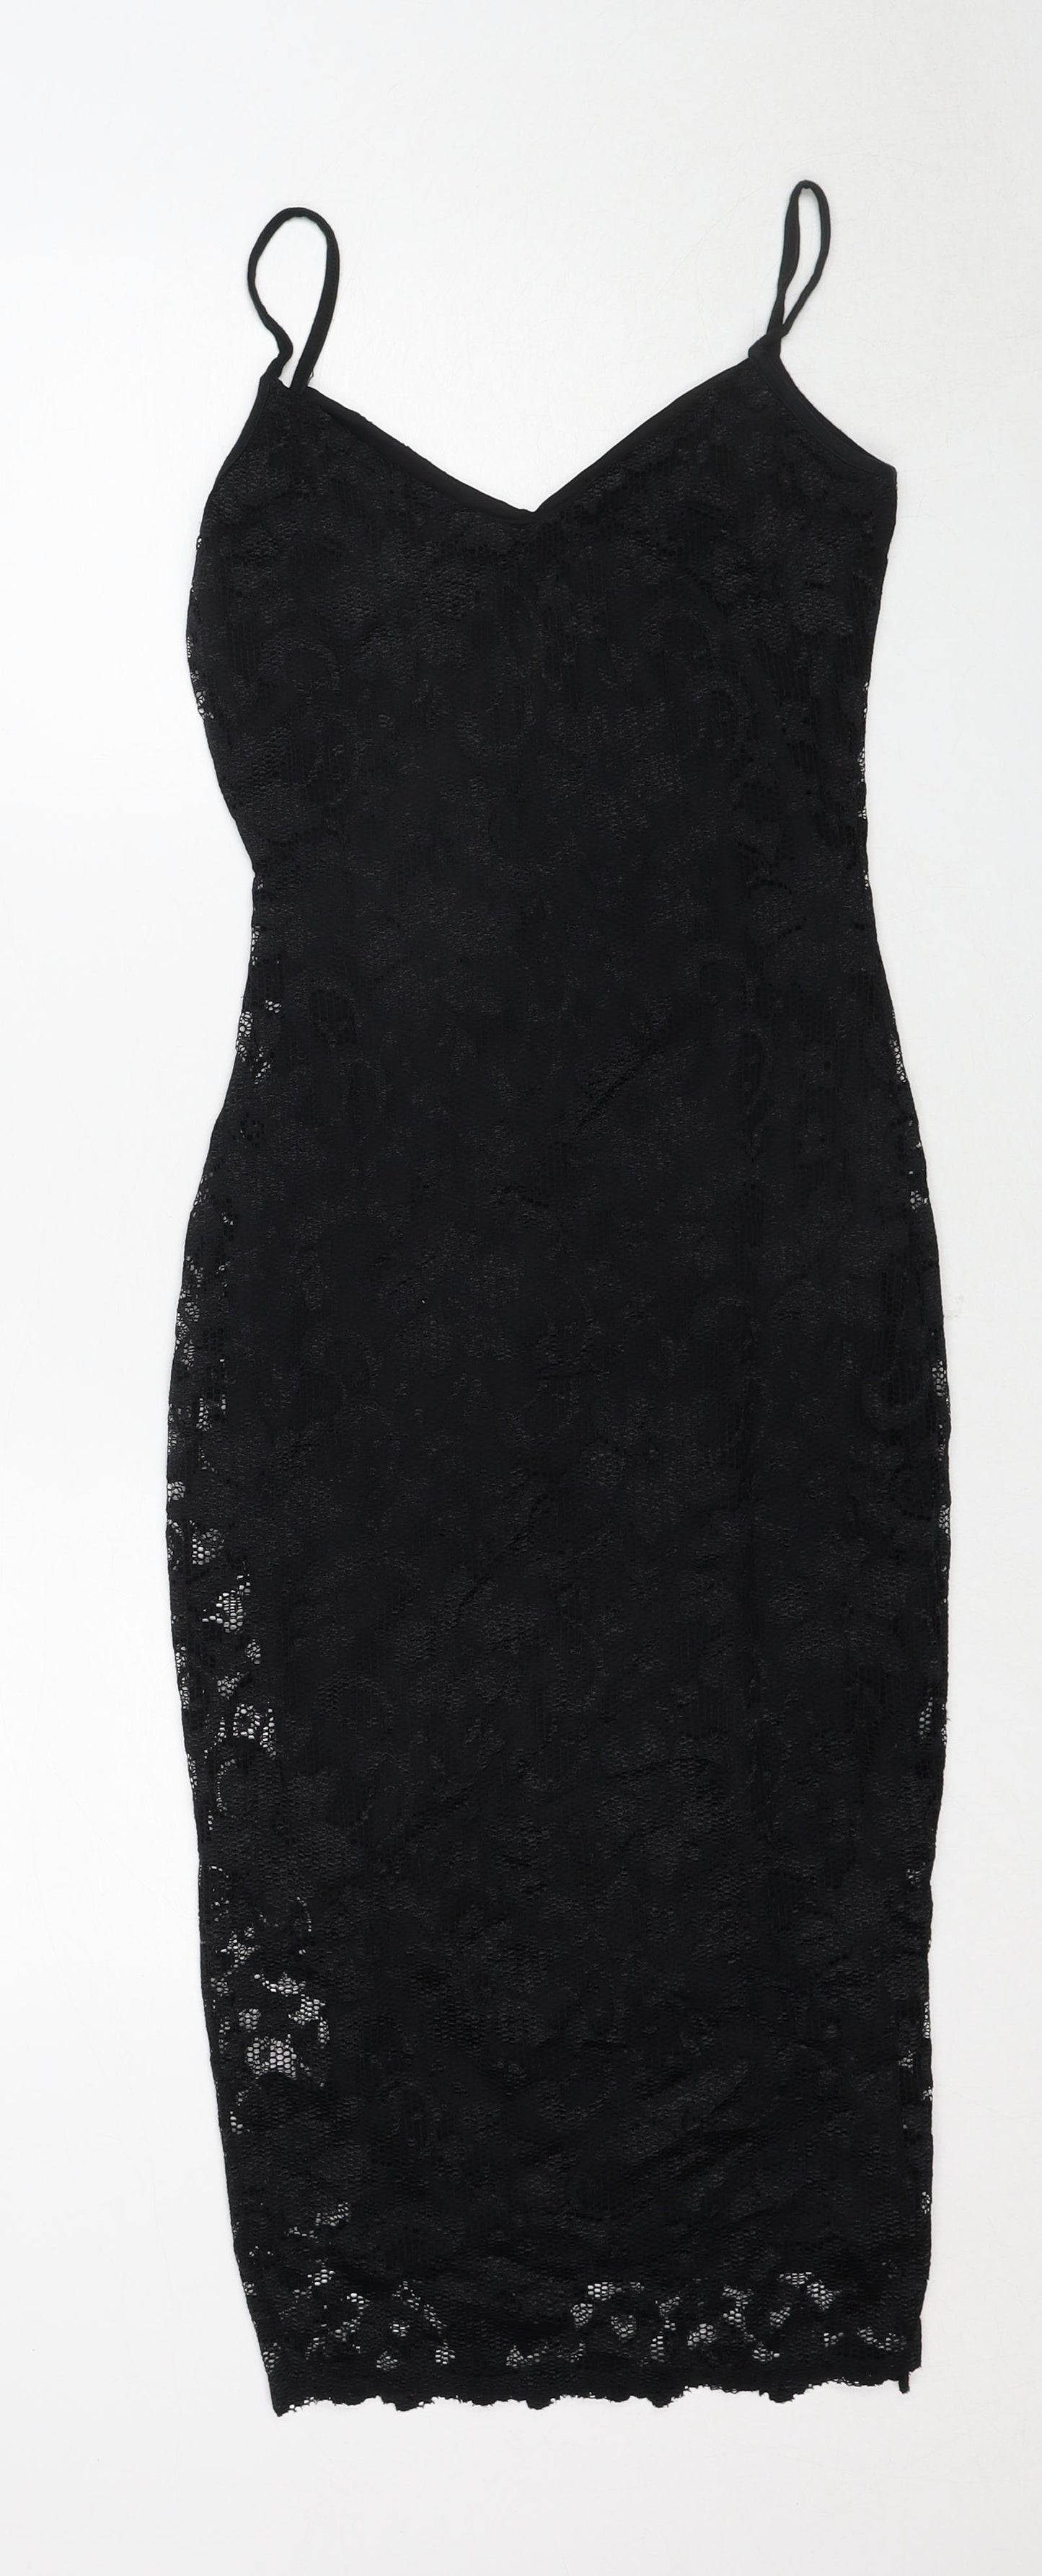 Boohoo Womens Black Polyester Bodycon Size 8 V-Neck Pullover